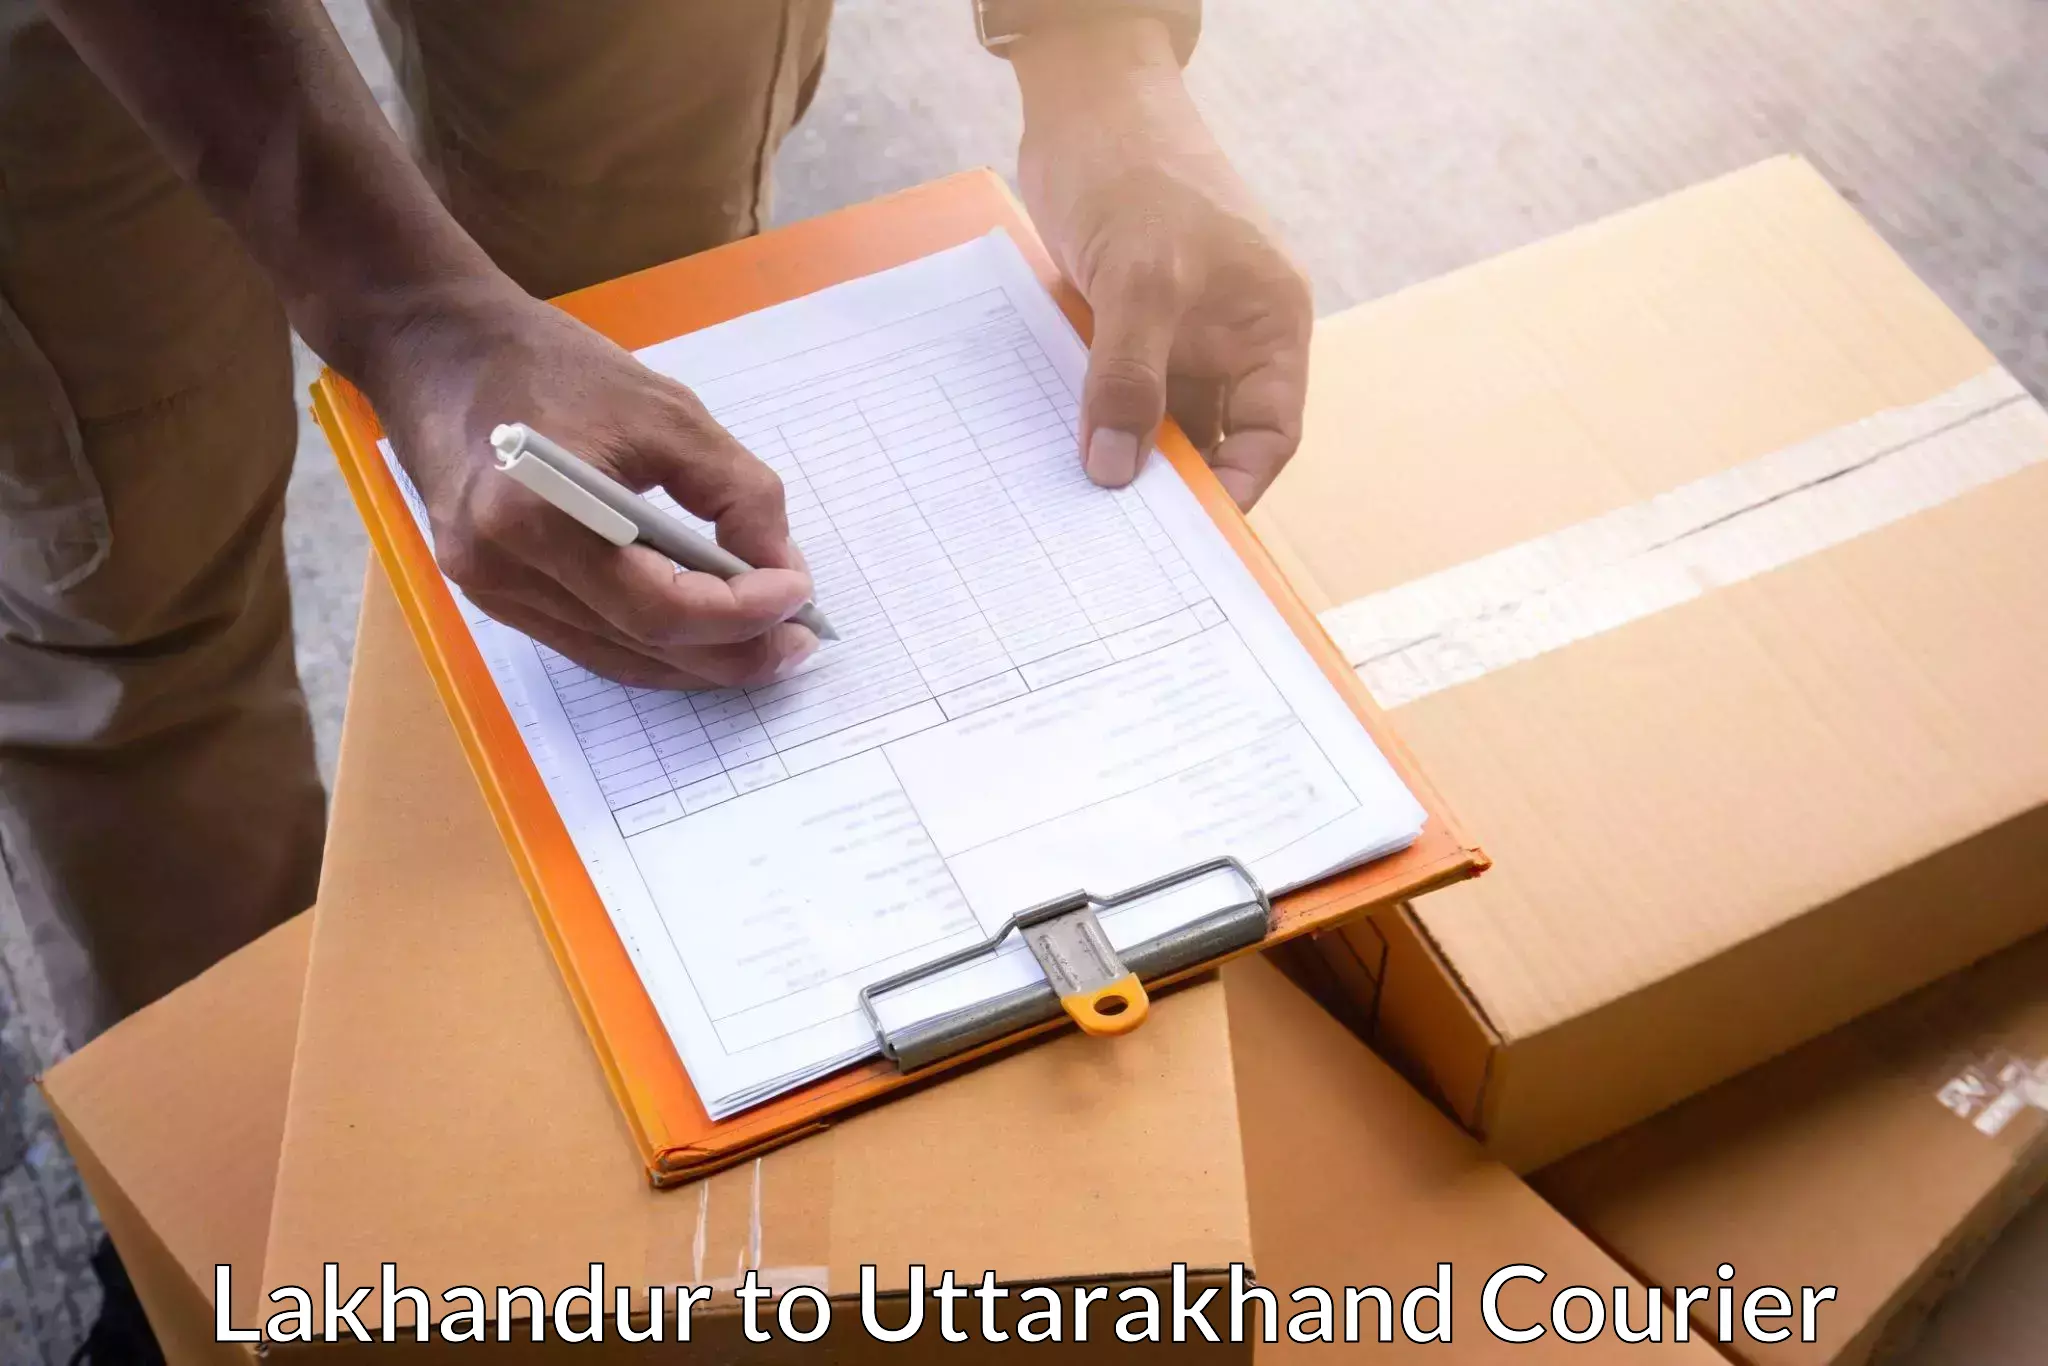 Global shipping solutions Lakhandur to Paithani